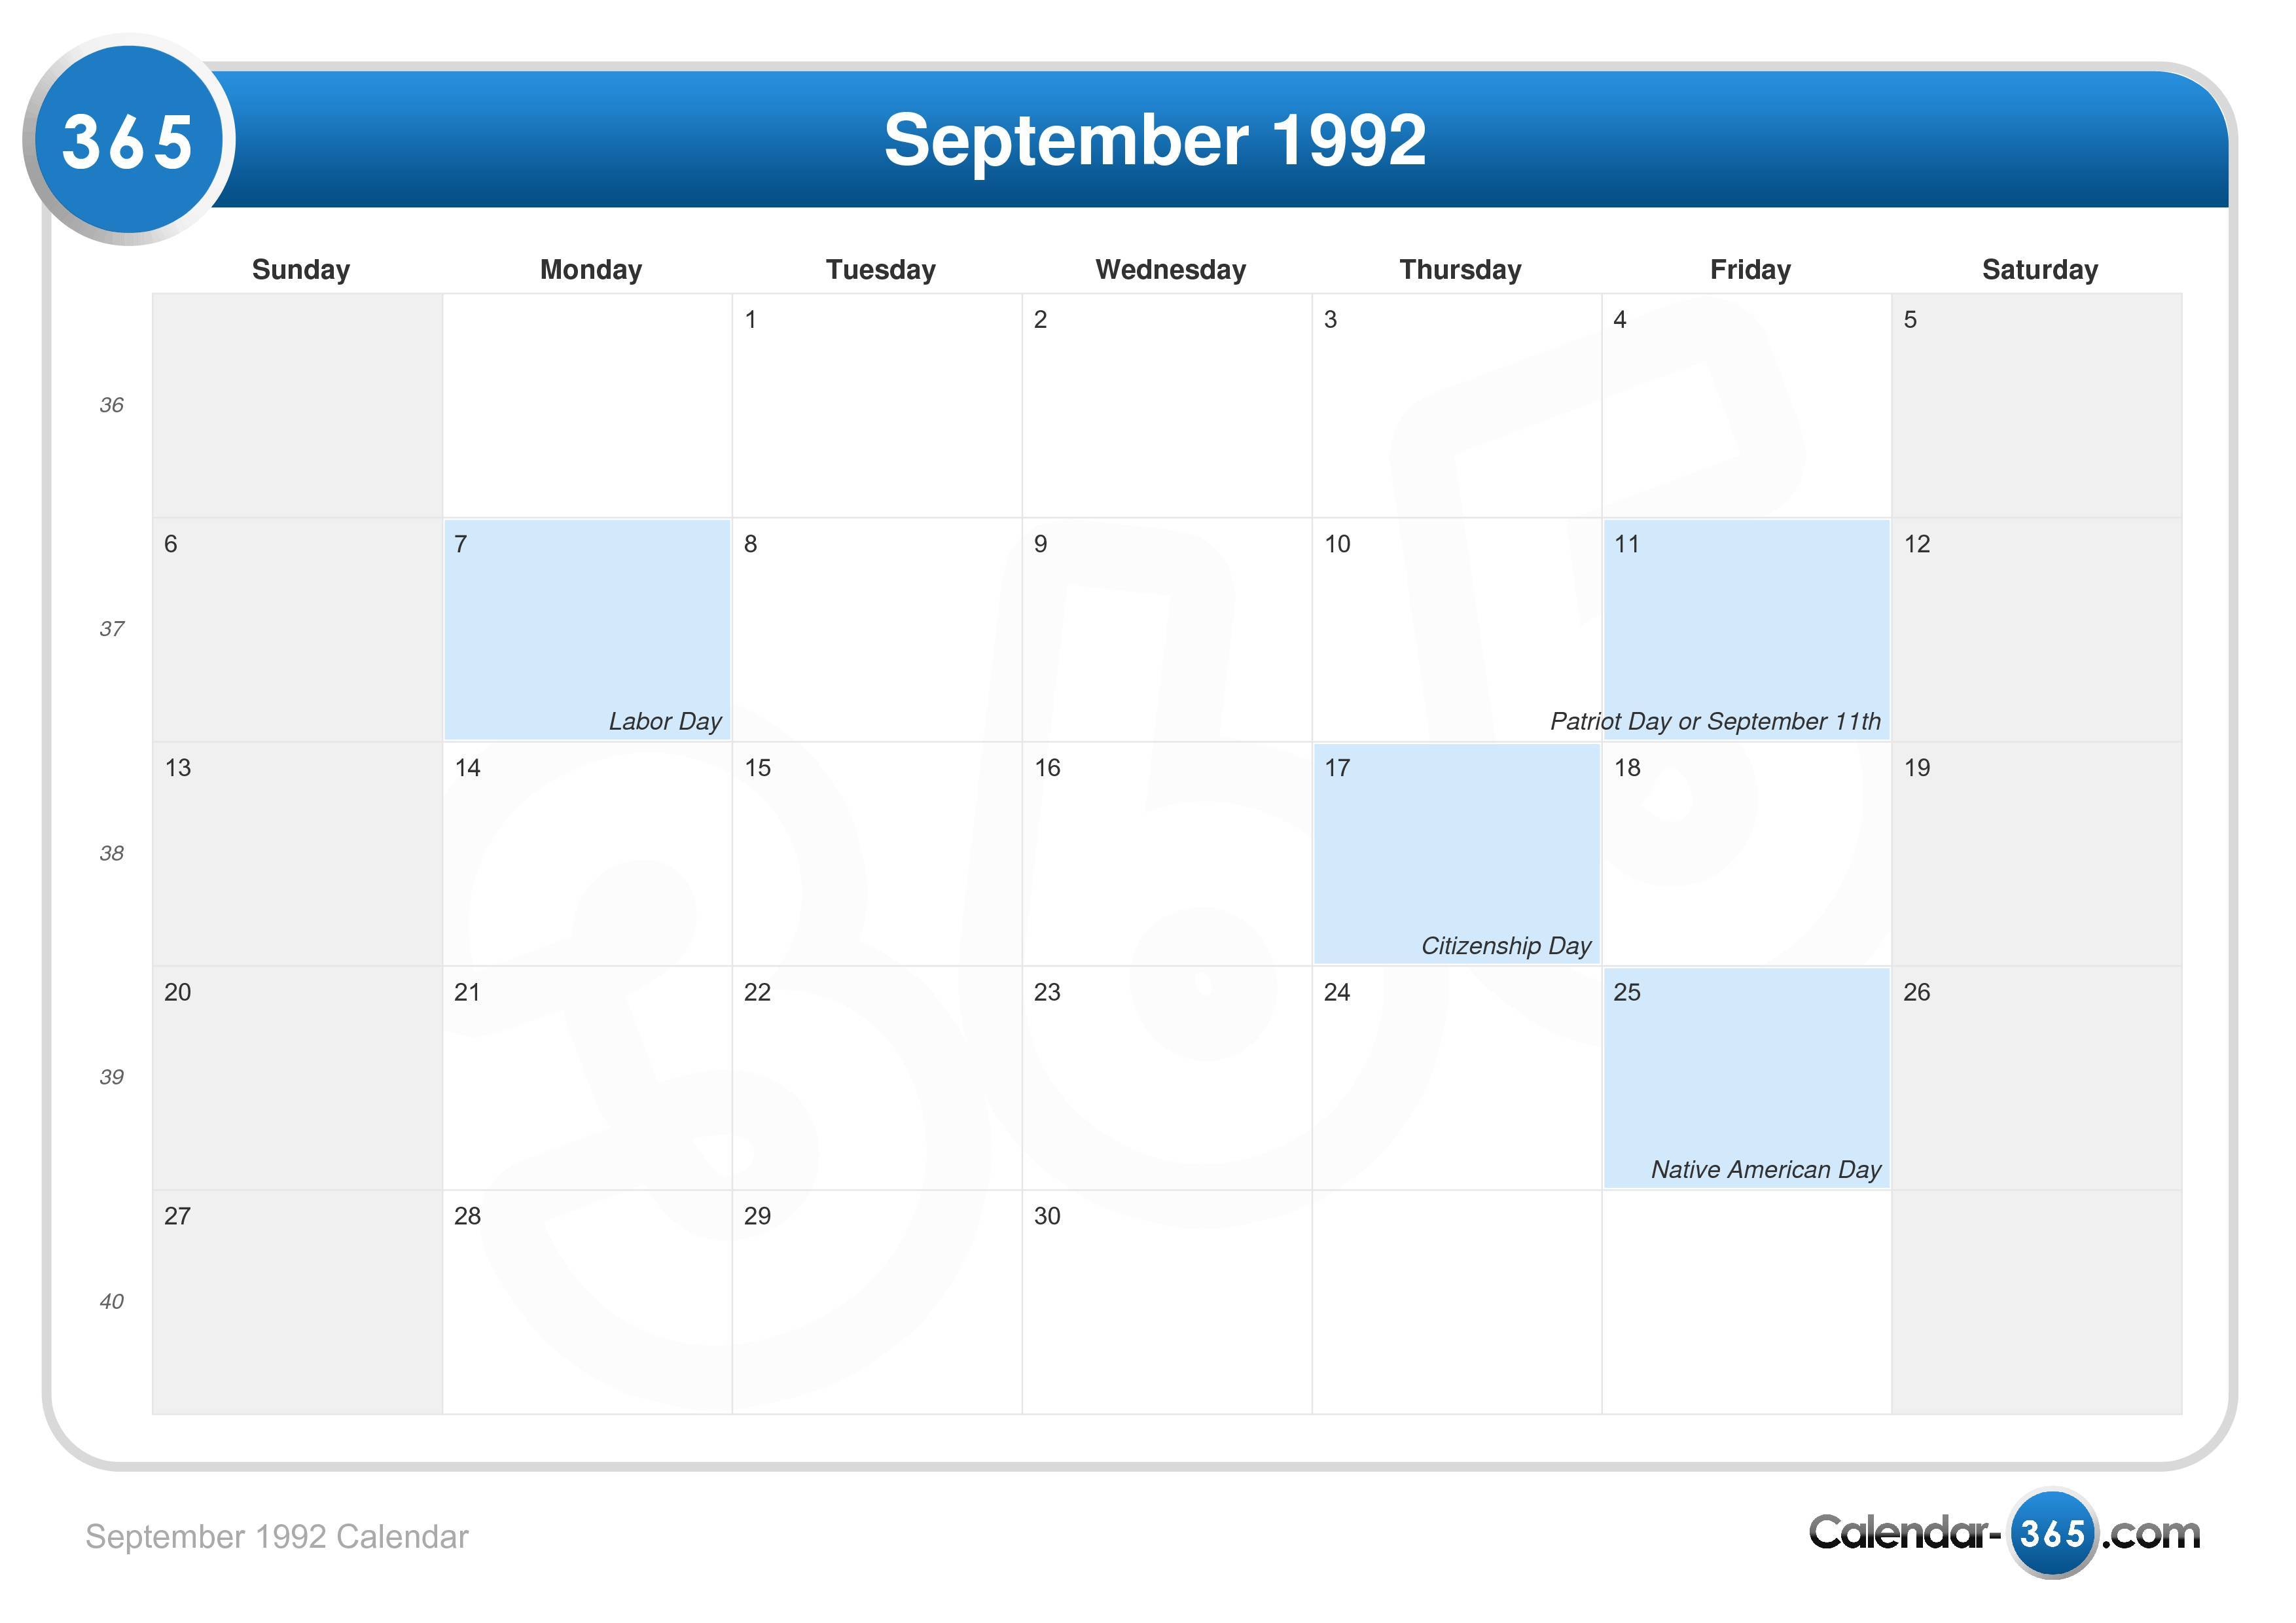 September 1992 Calendar